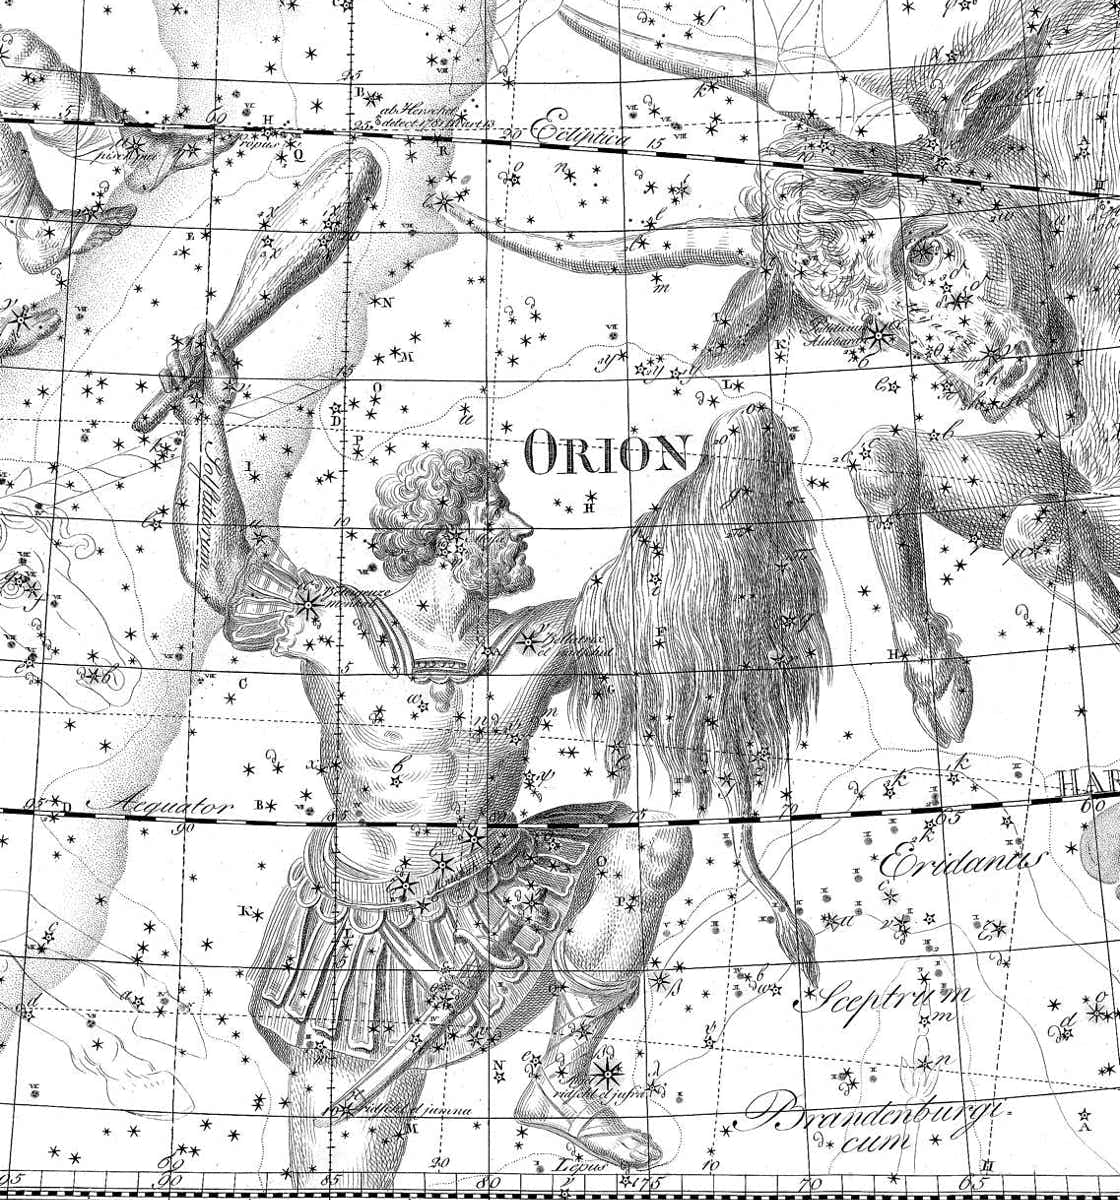 Orion faces Taurus on Bode's Uranographia